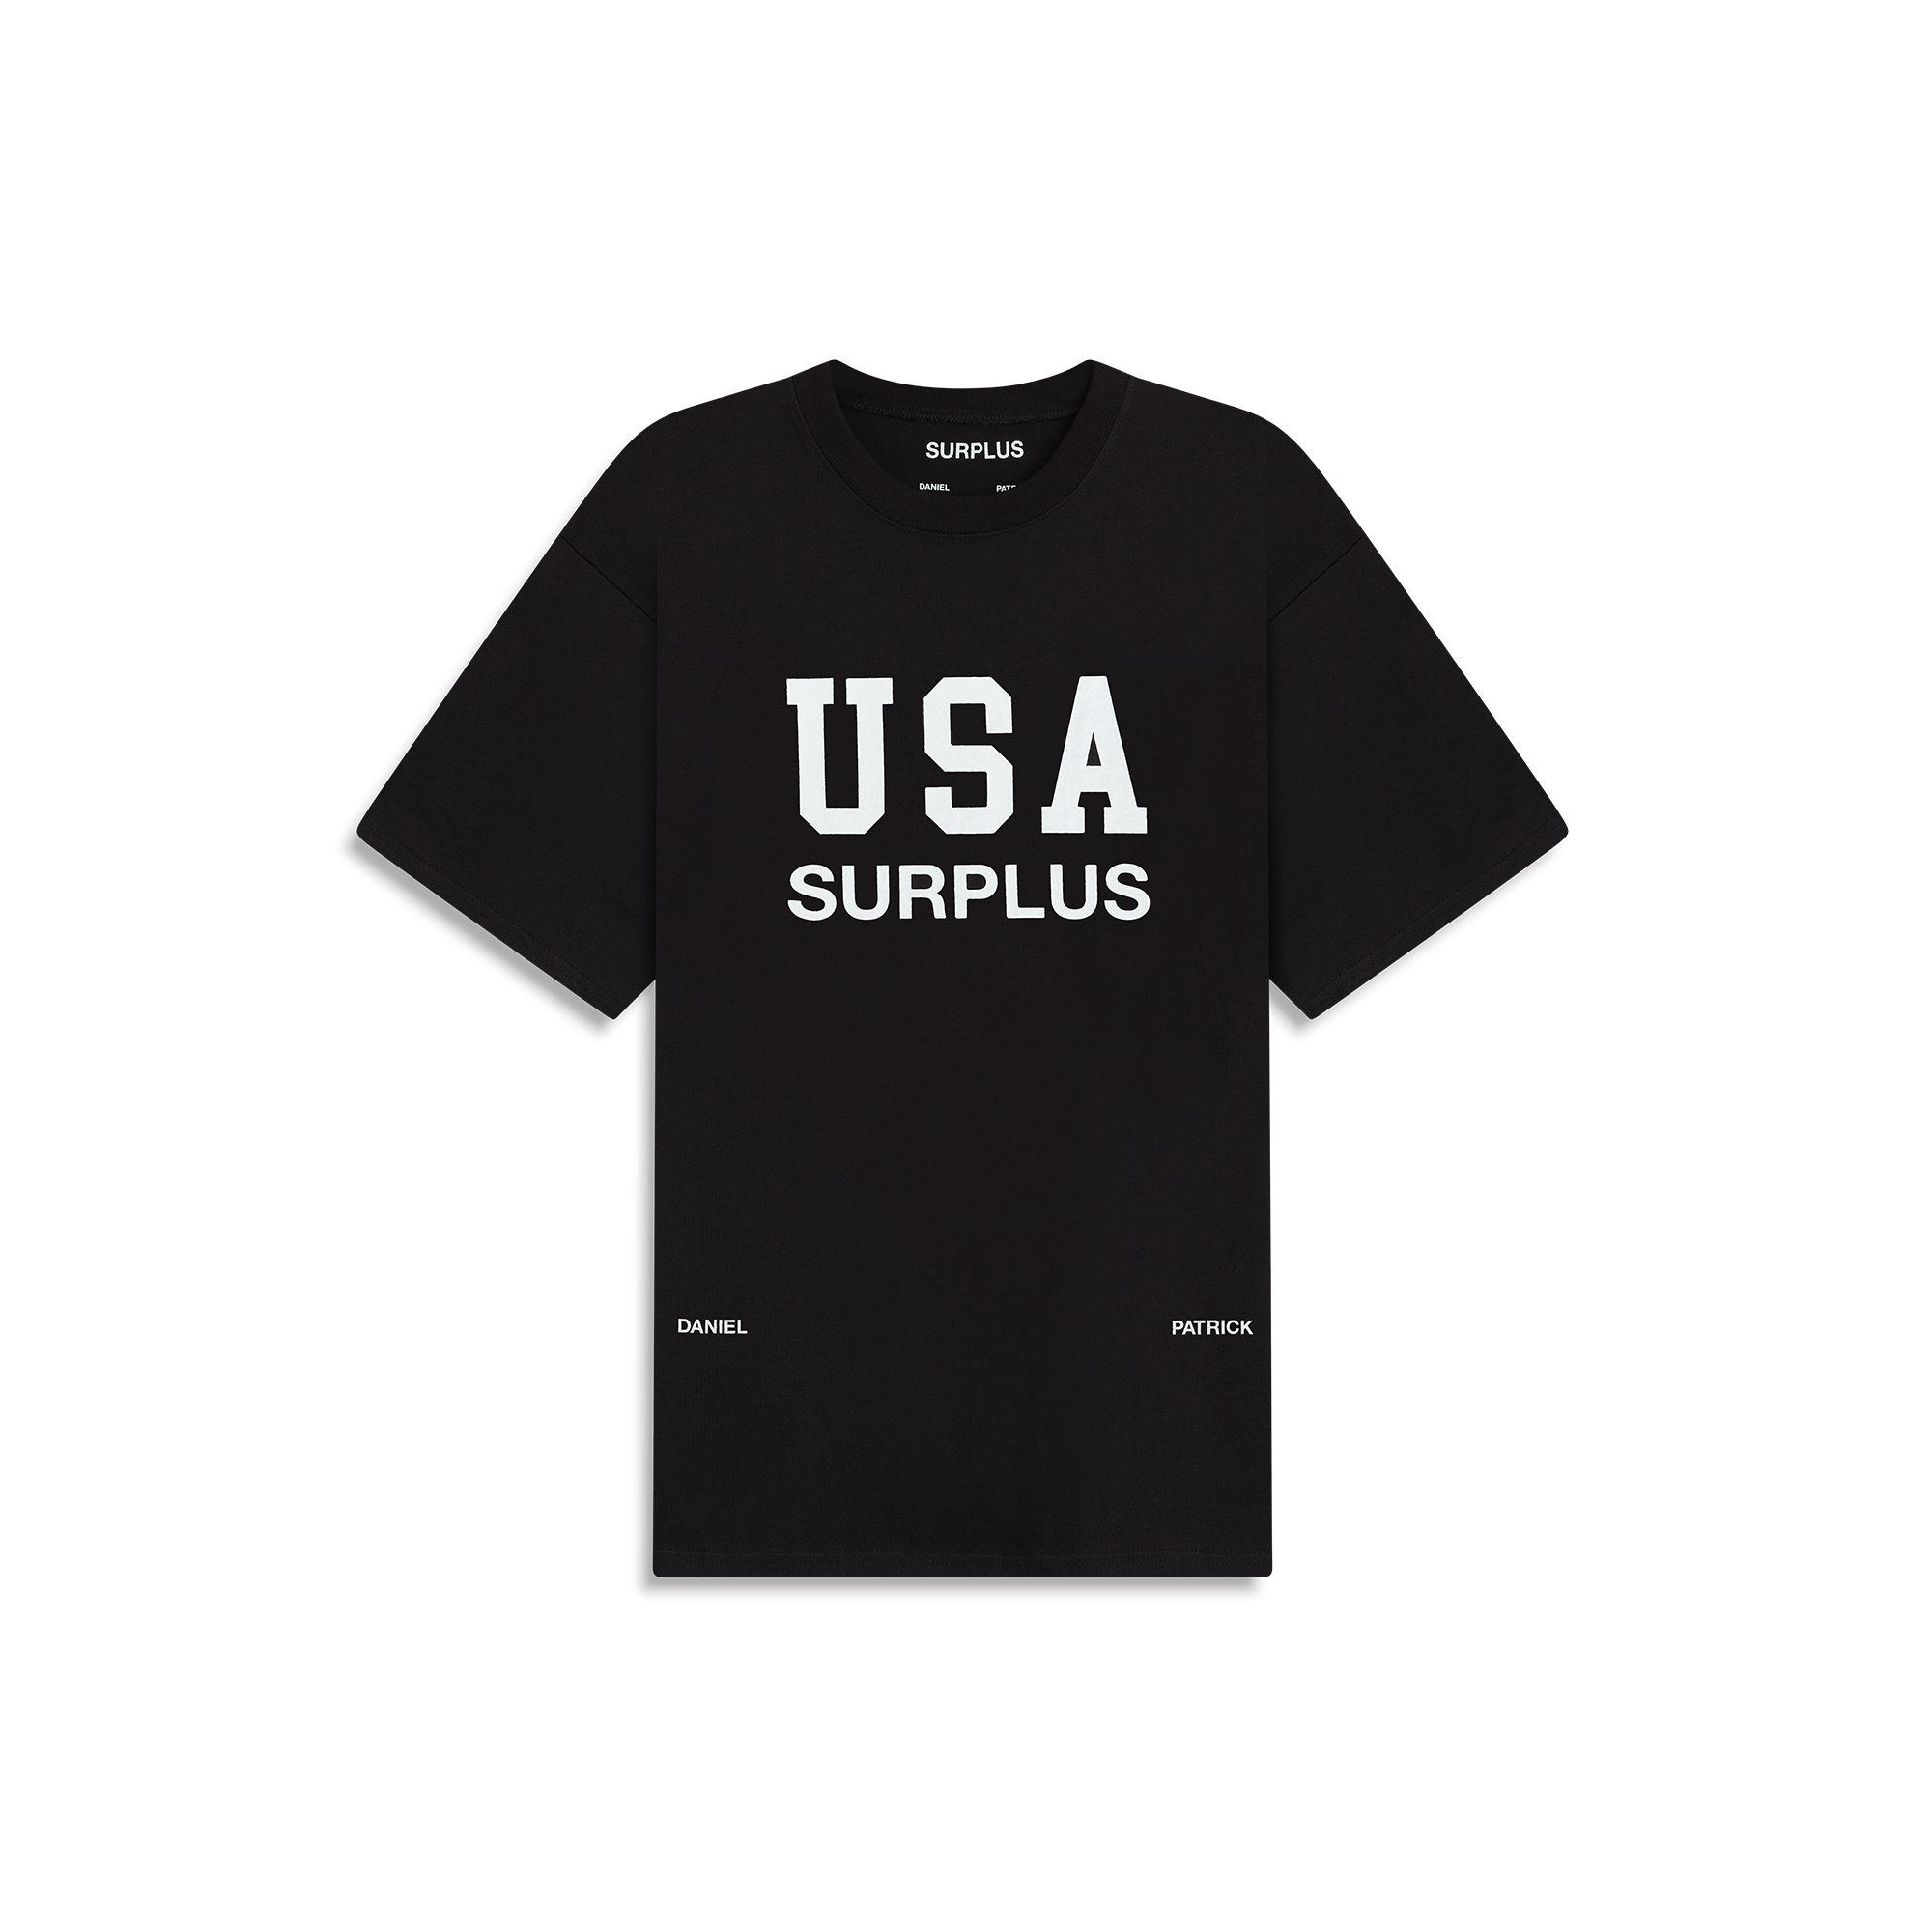 USA surplus tee / black + white